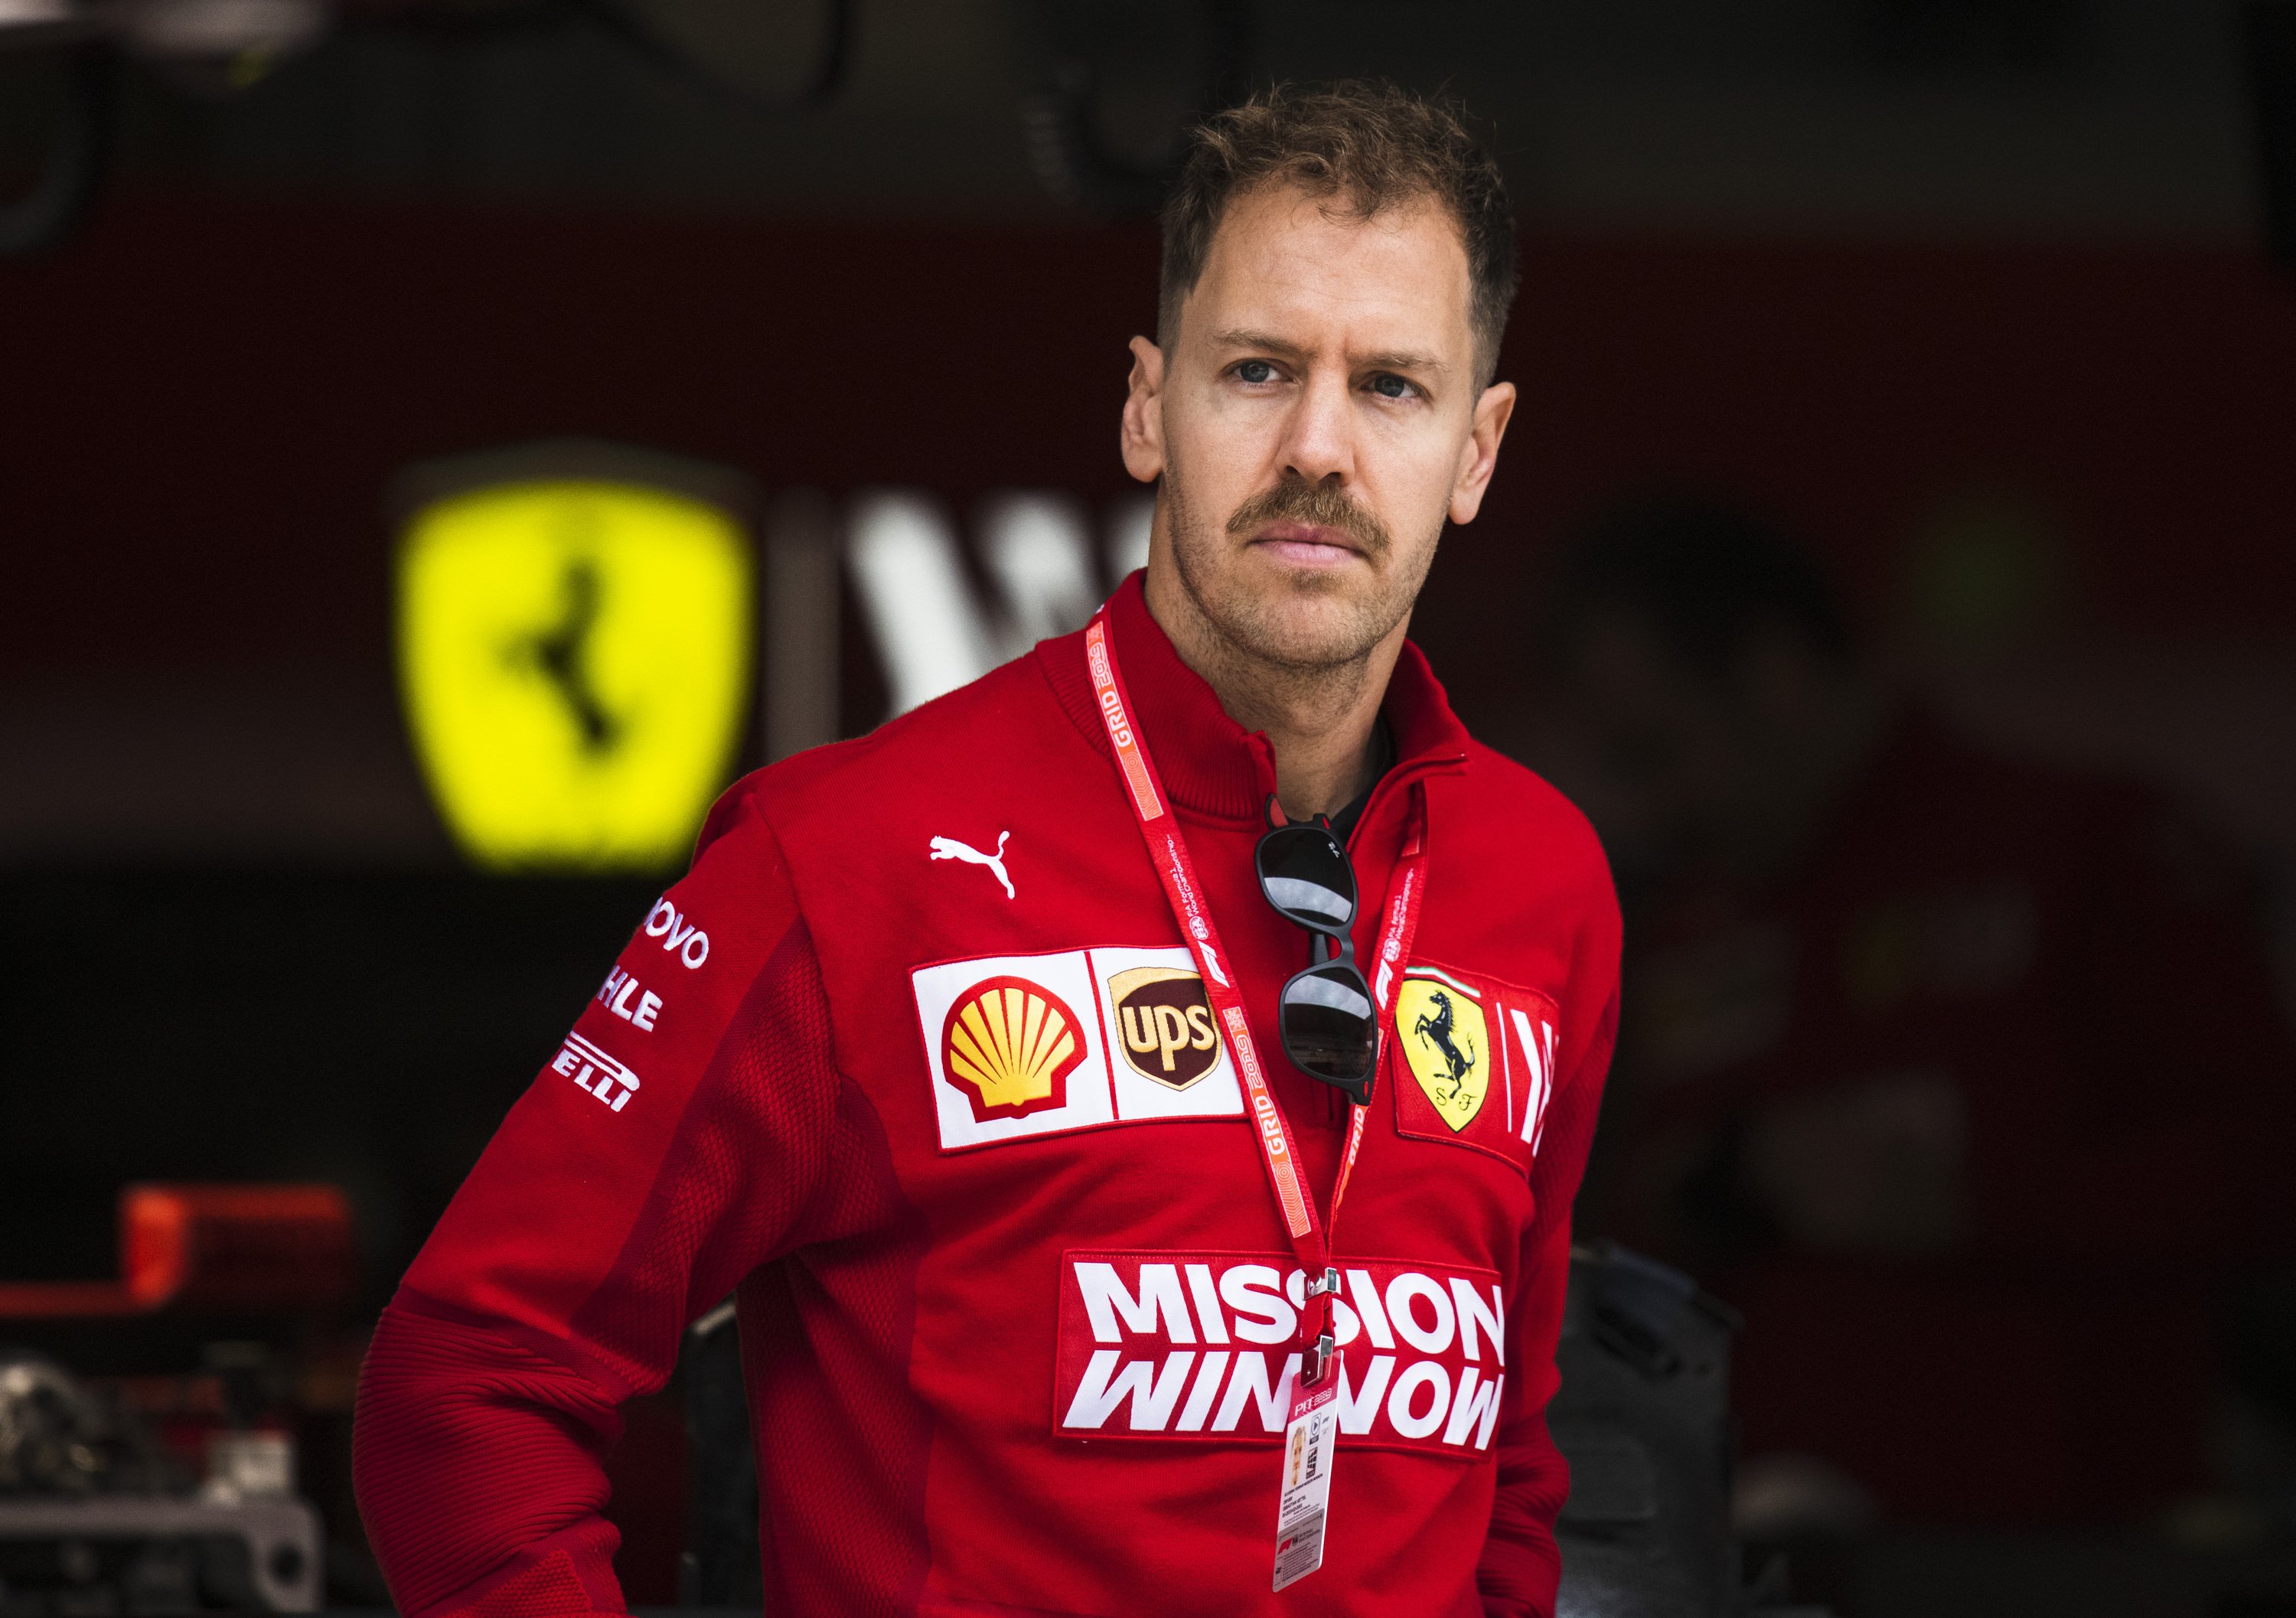 F1, Ferrari: Sebastian Vettel, quanto costa e quanto rende?